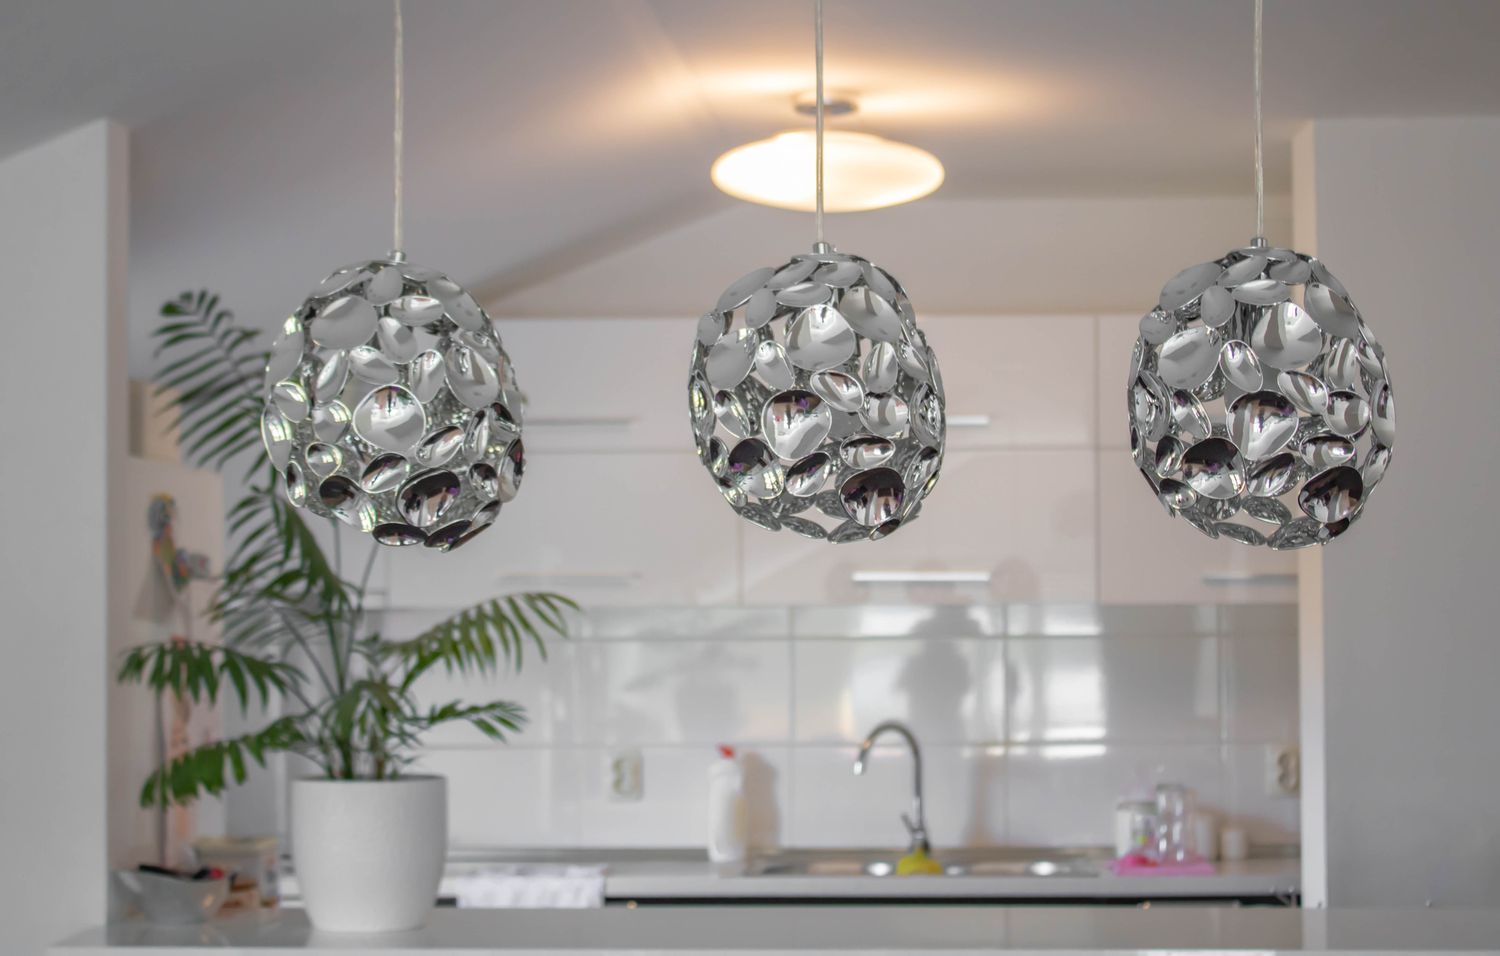 Three modern metallic pendant lighting hanging in front of kitchen